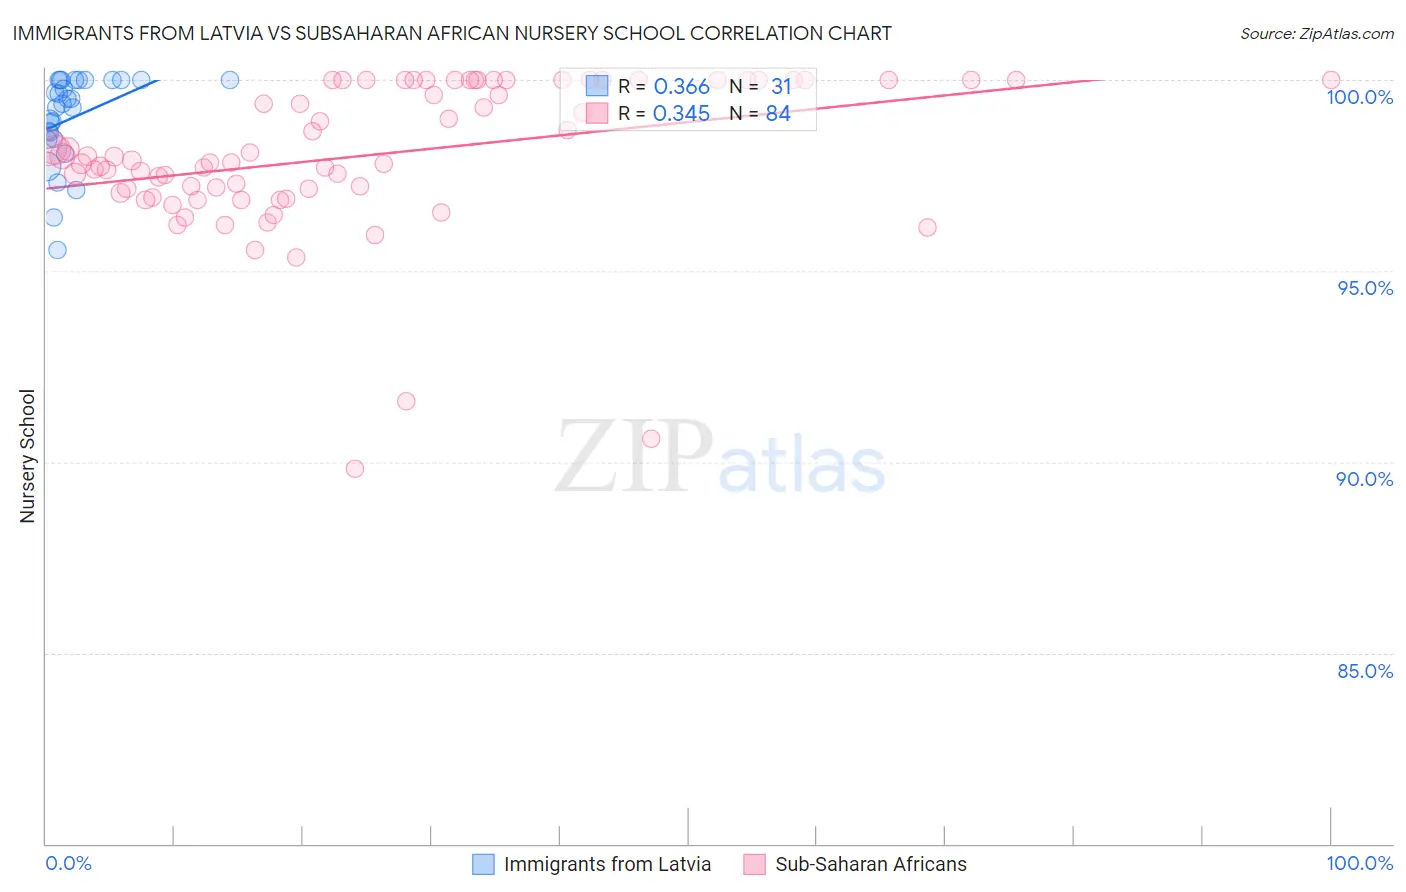 Immigrants from Latvia vs Subsaharan African Nursery School